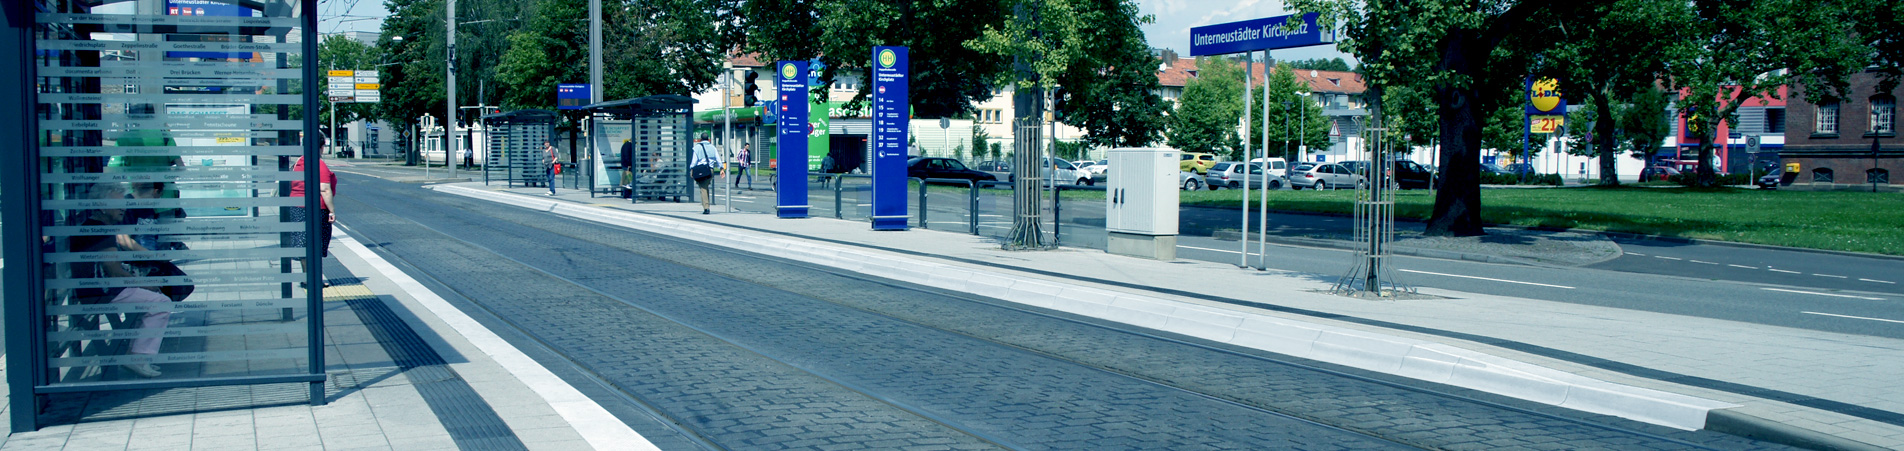 Straßenhaltestelle mit KSBplus in Kassel